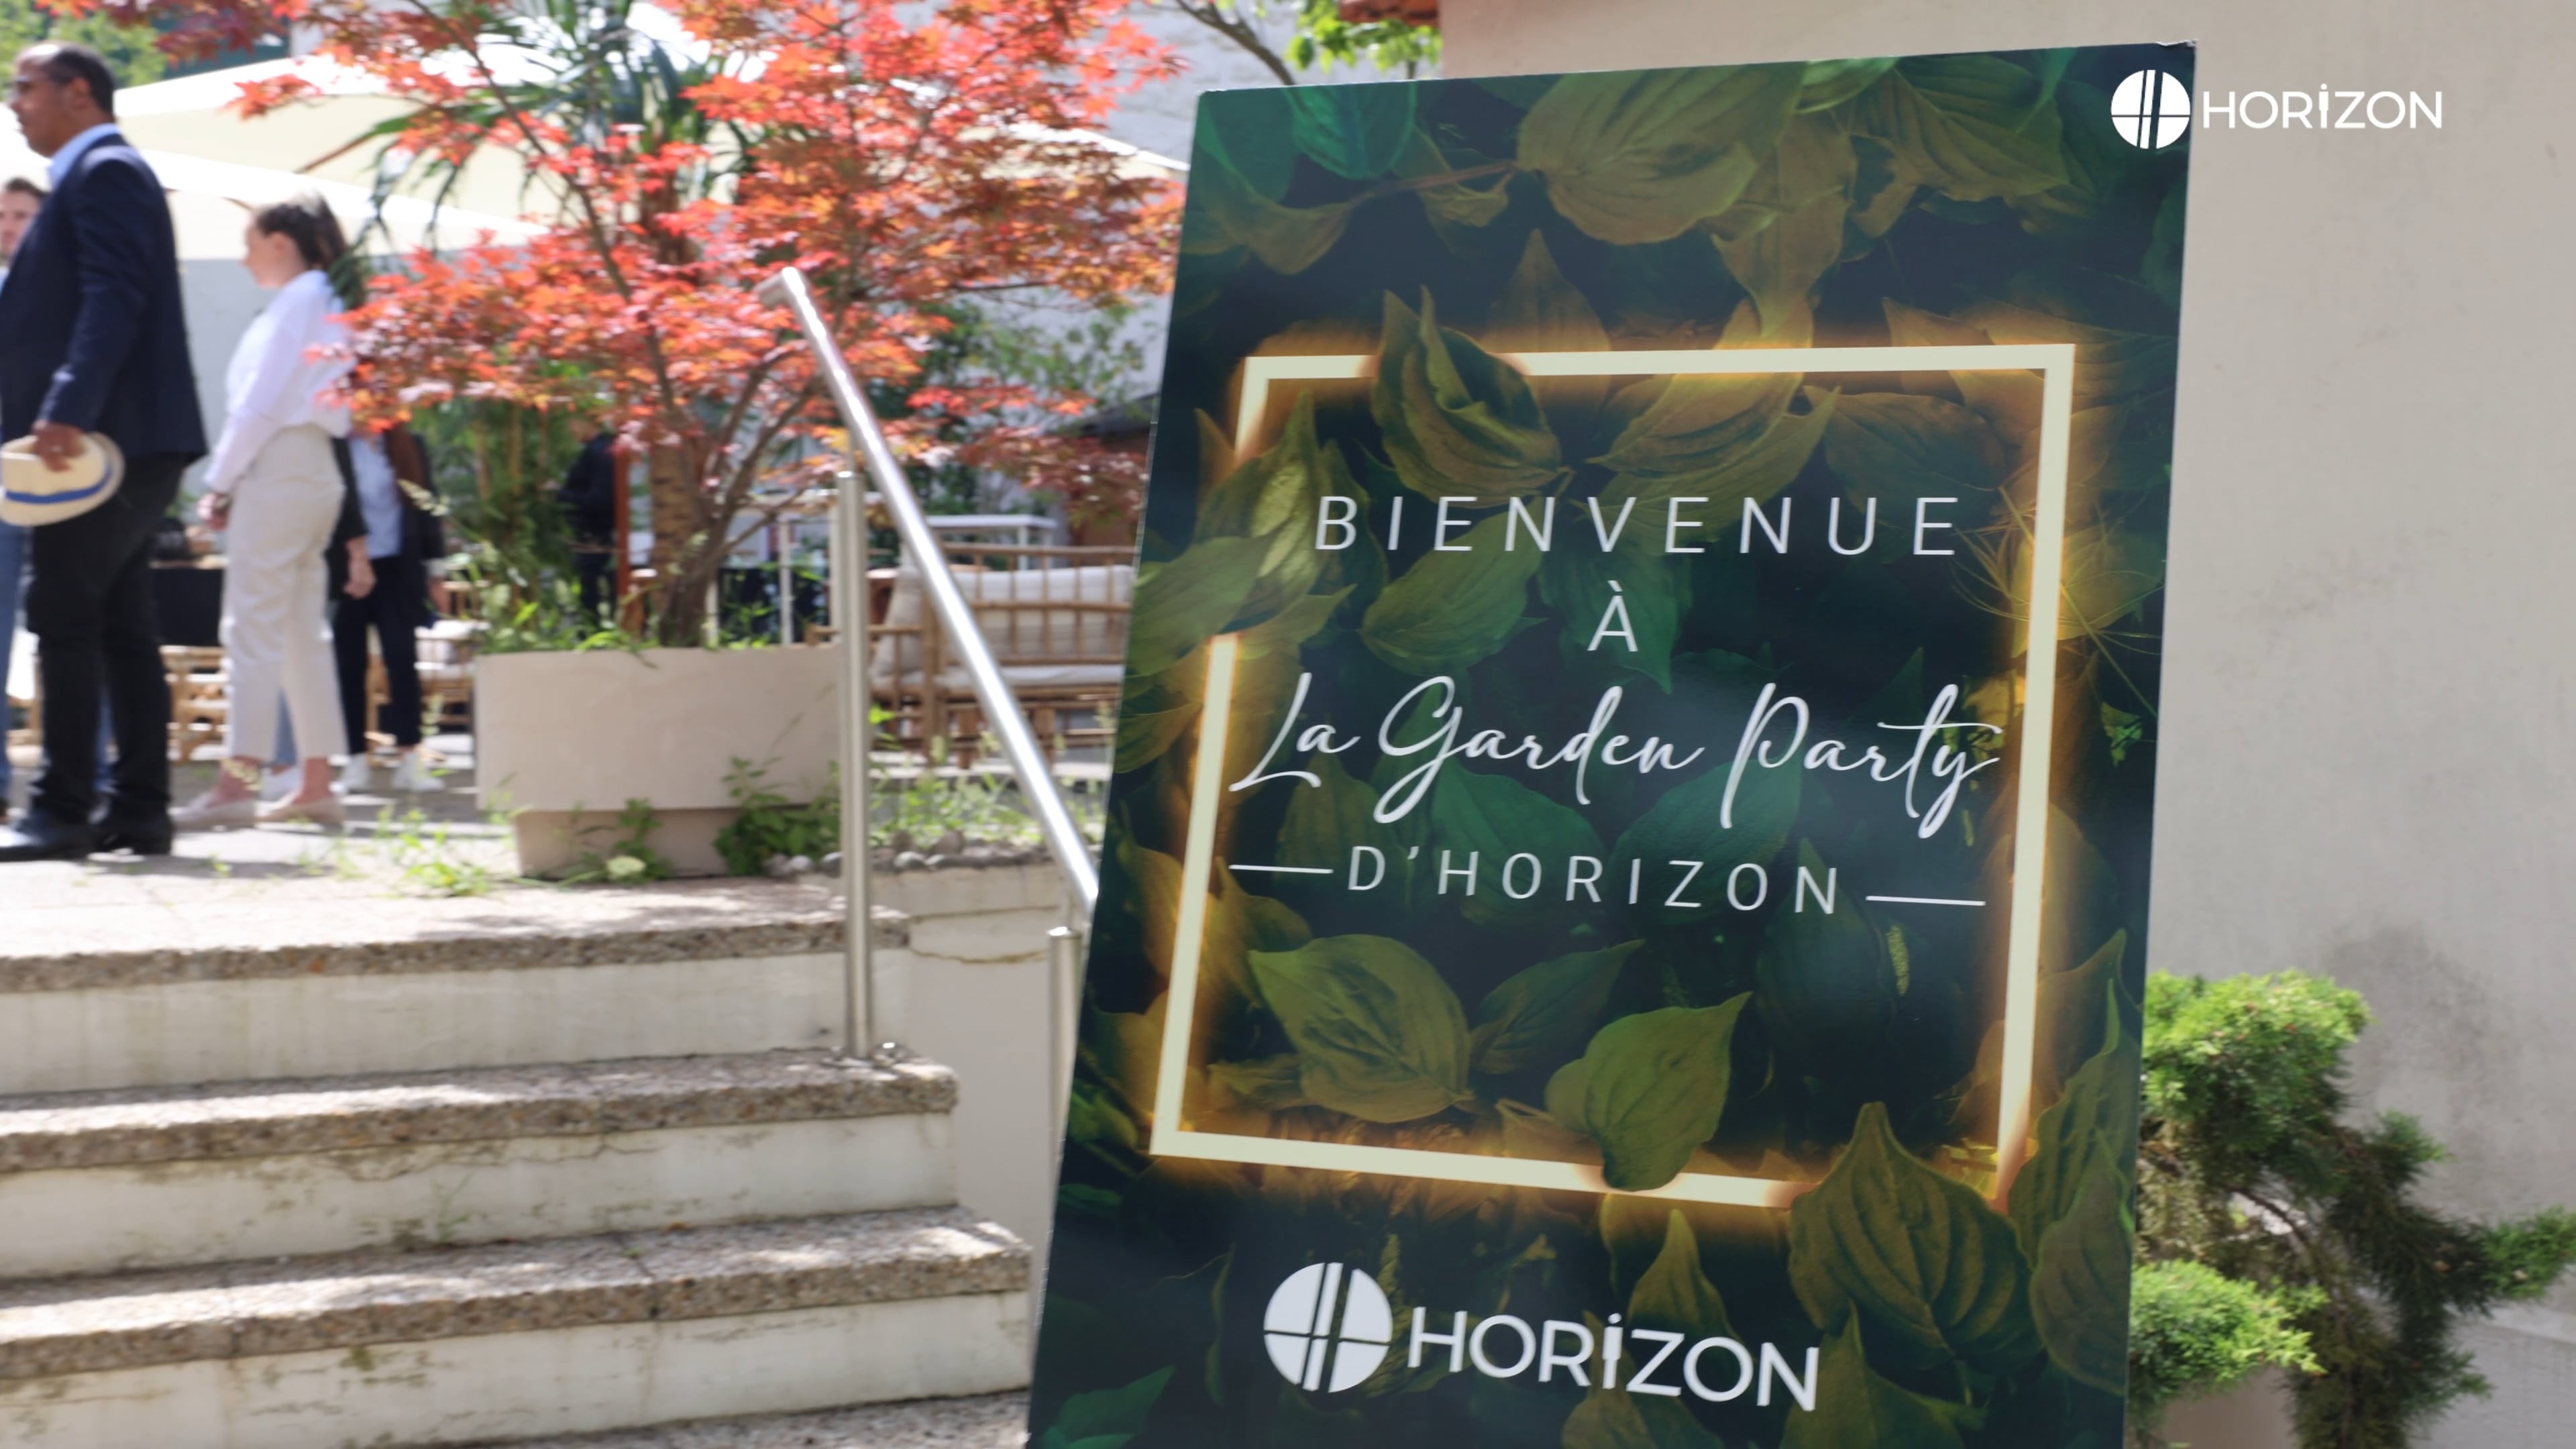 La garden party d'Horizon